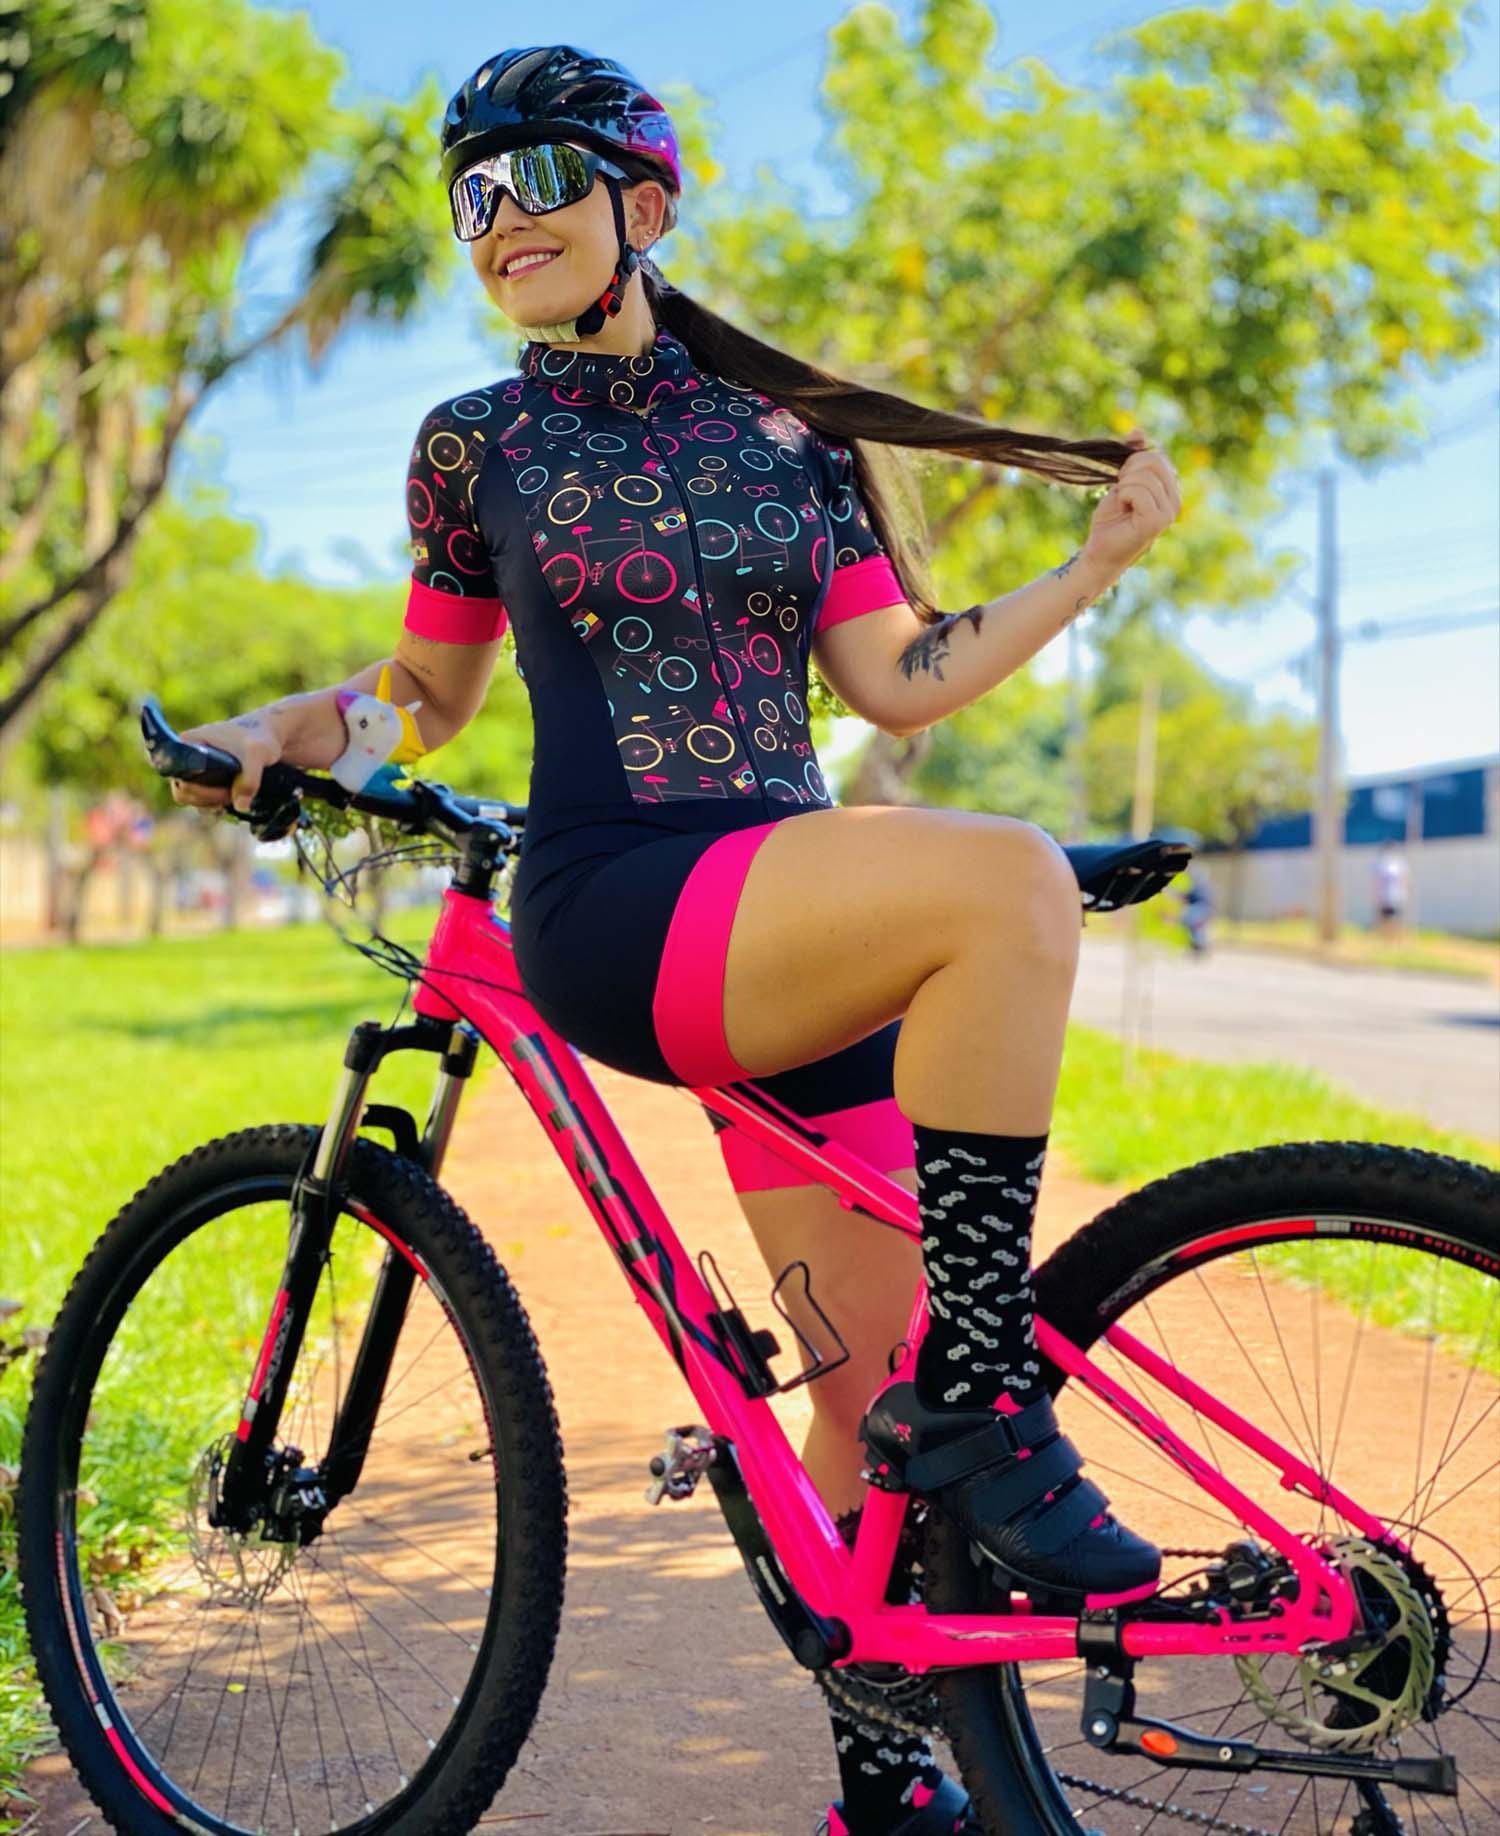 Macaquinho Feminino Ciclismo Bike Clik - Giro Radical